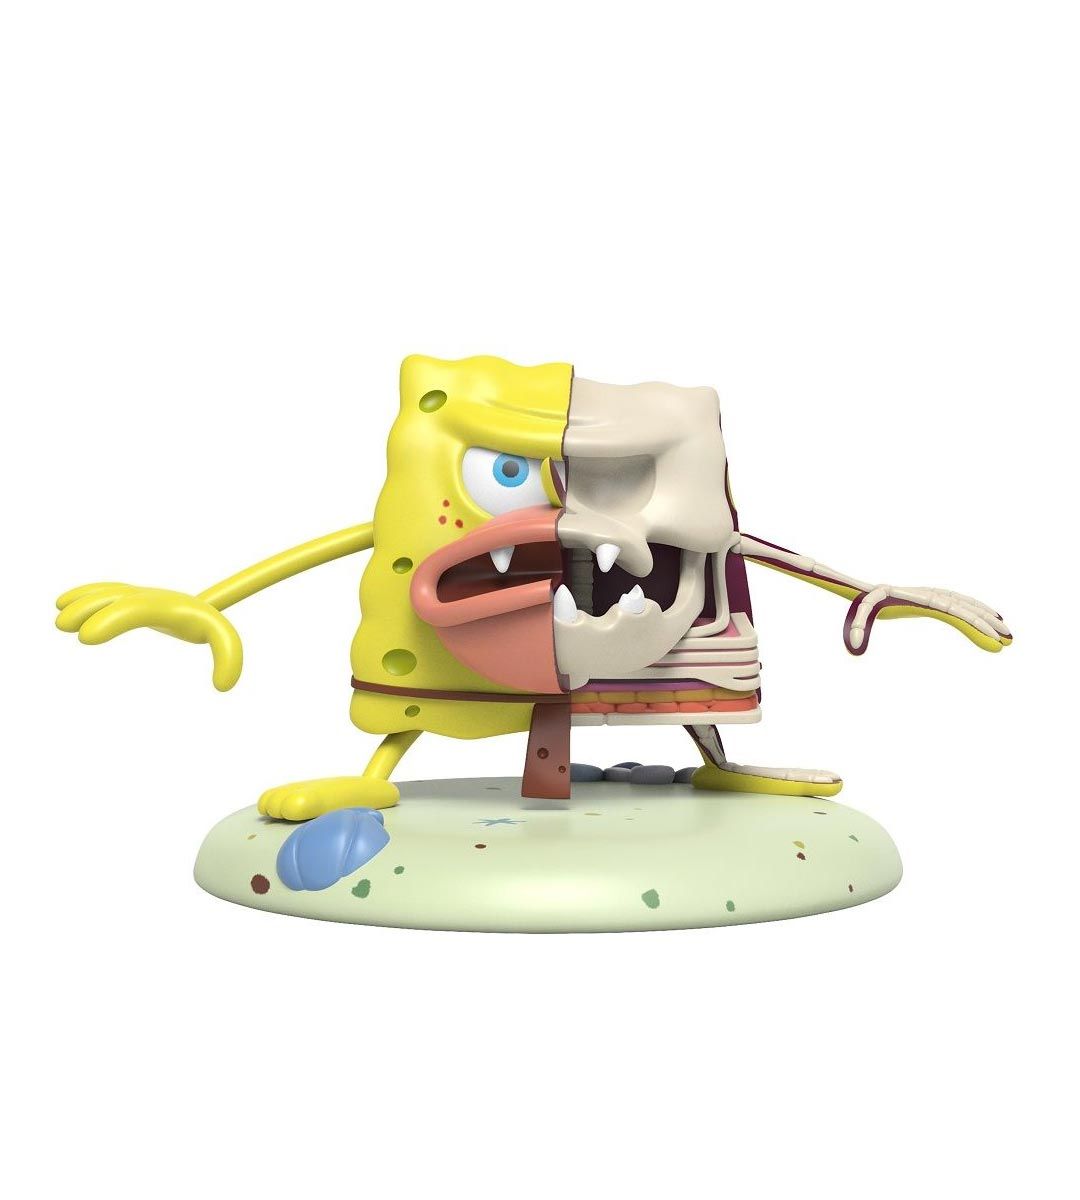 Hidden Dissectibles Spongebob Squarepants Meme Edition